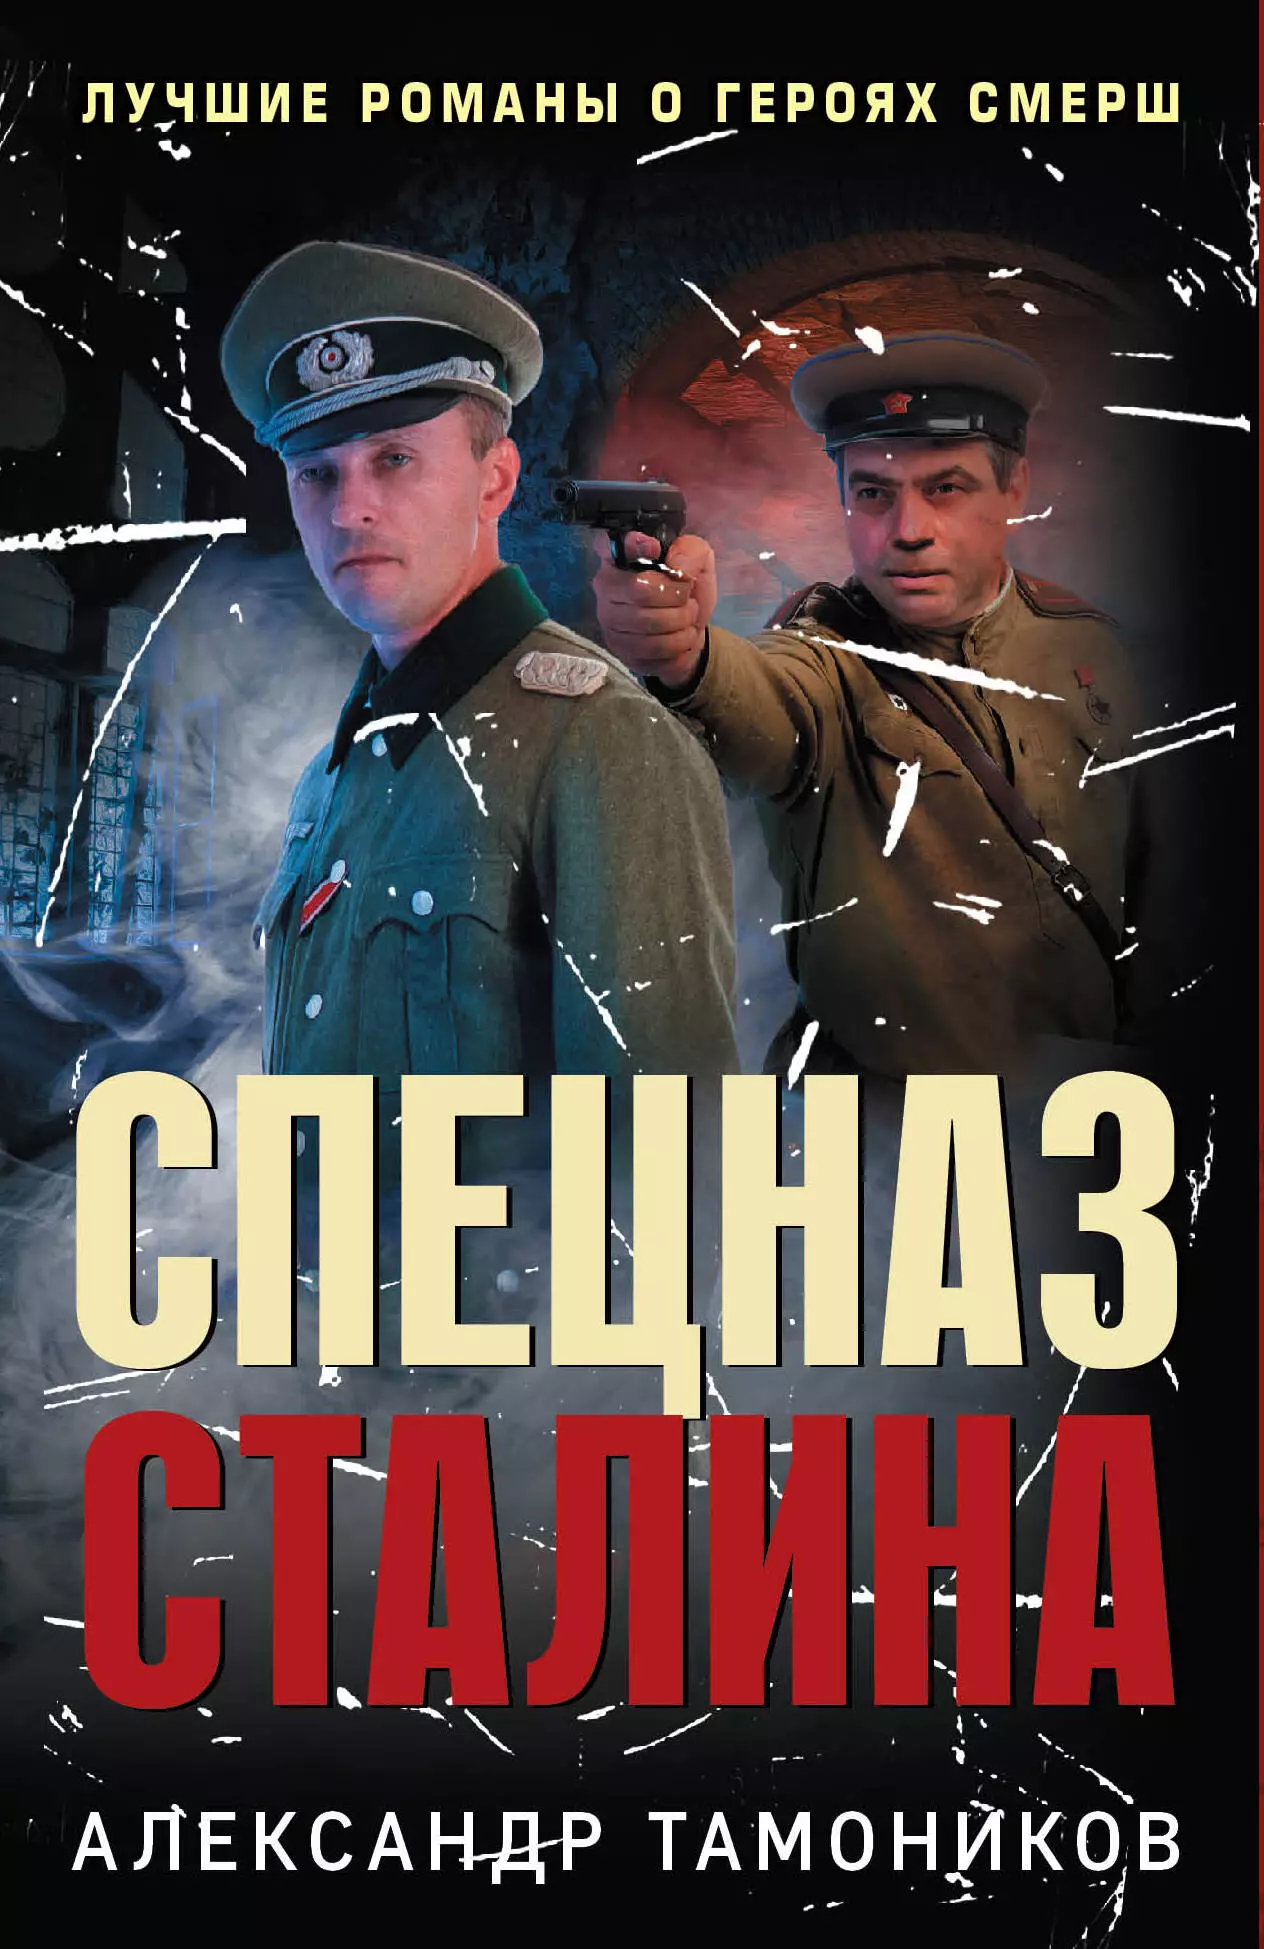 Тамоников Александр Александрович - Спецназ Сталина (комплект из 4 книг)